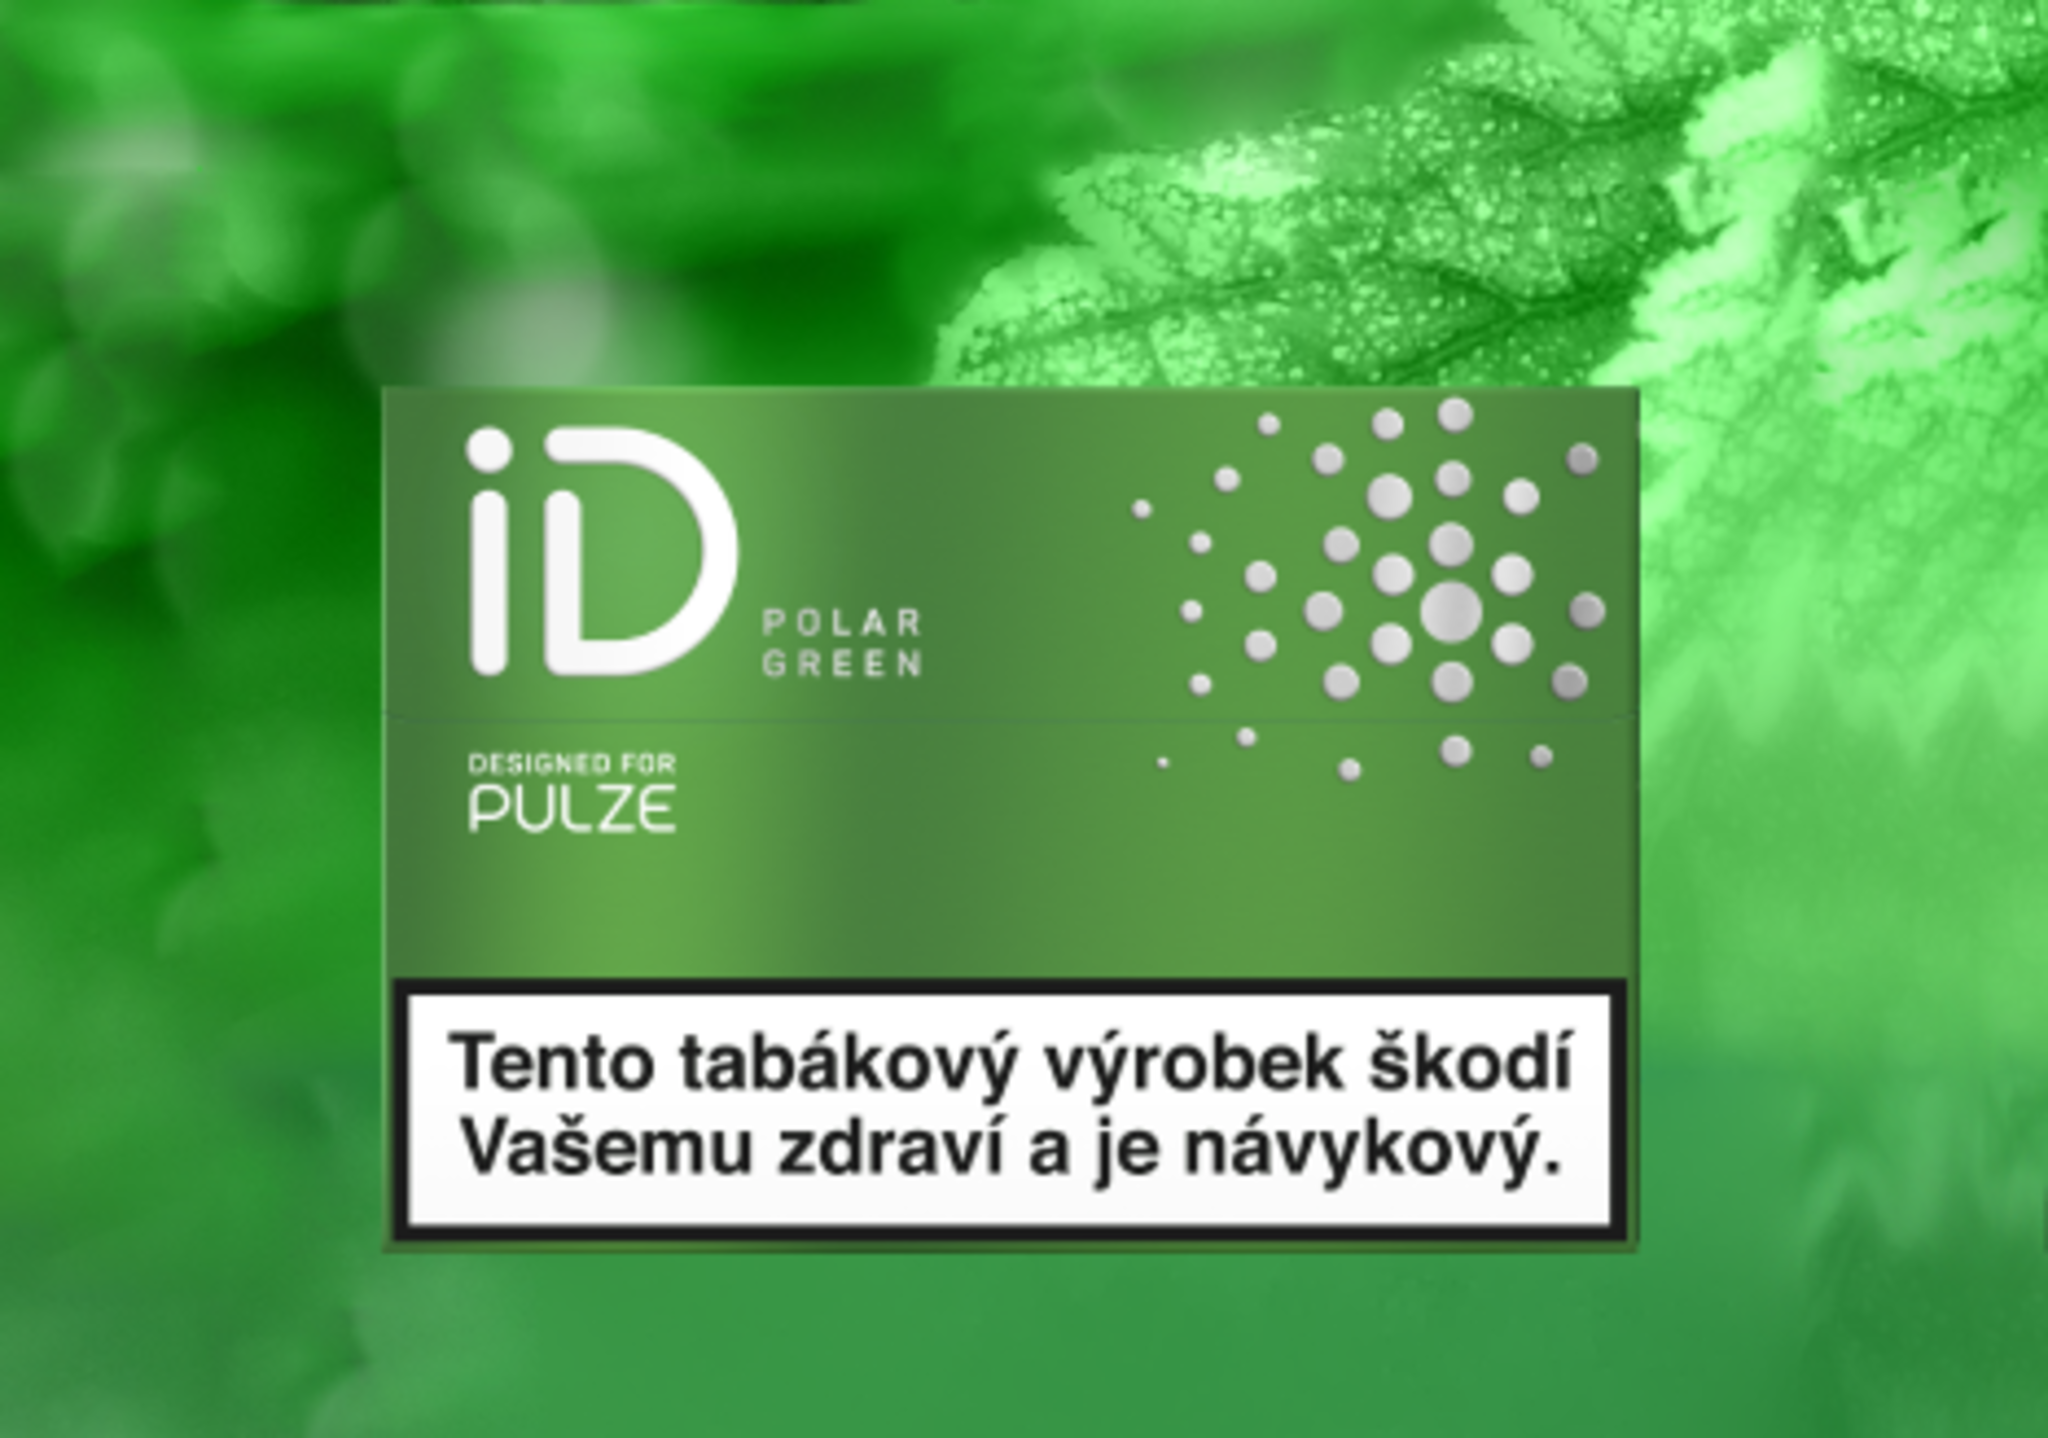 iD Polar Green - Mood desktop